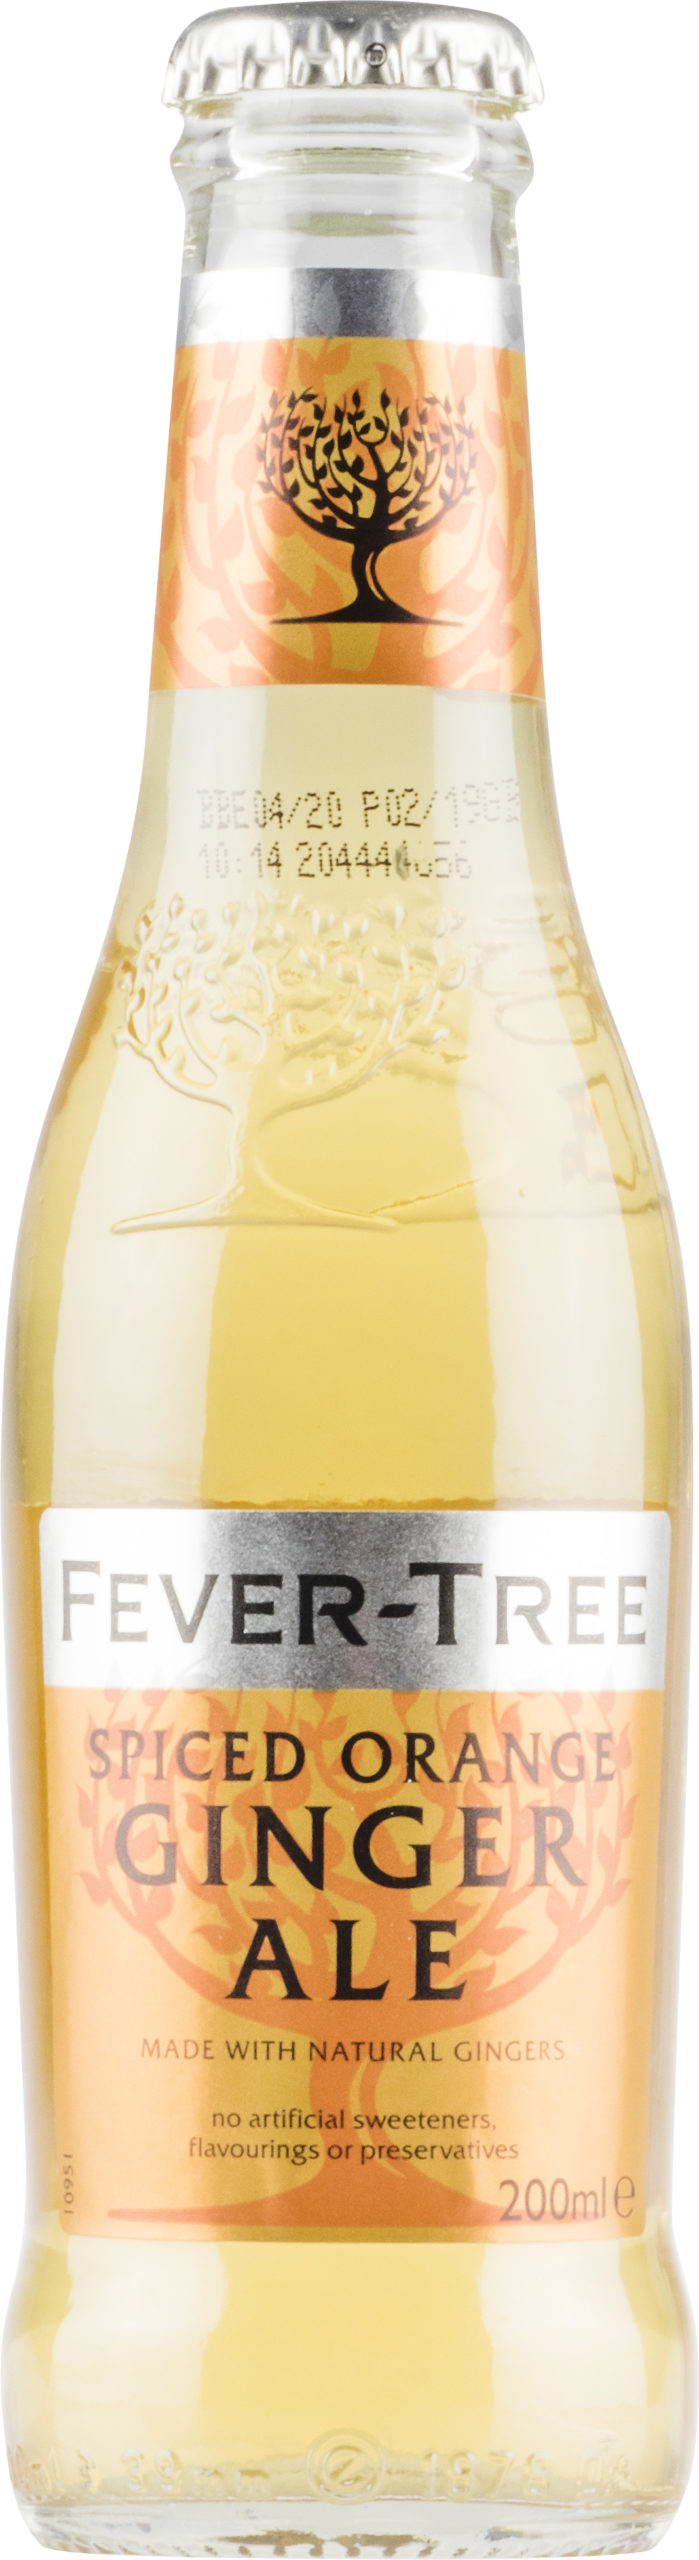 Fever-Tree Fever-Tree Spiced Orange Ginger Ale